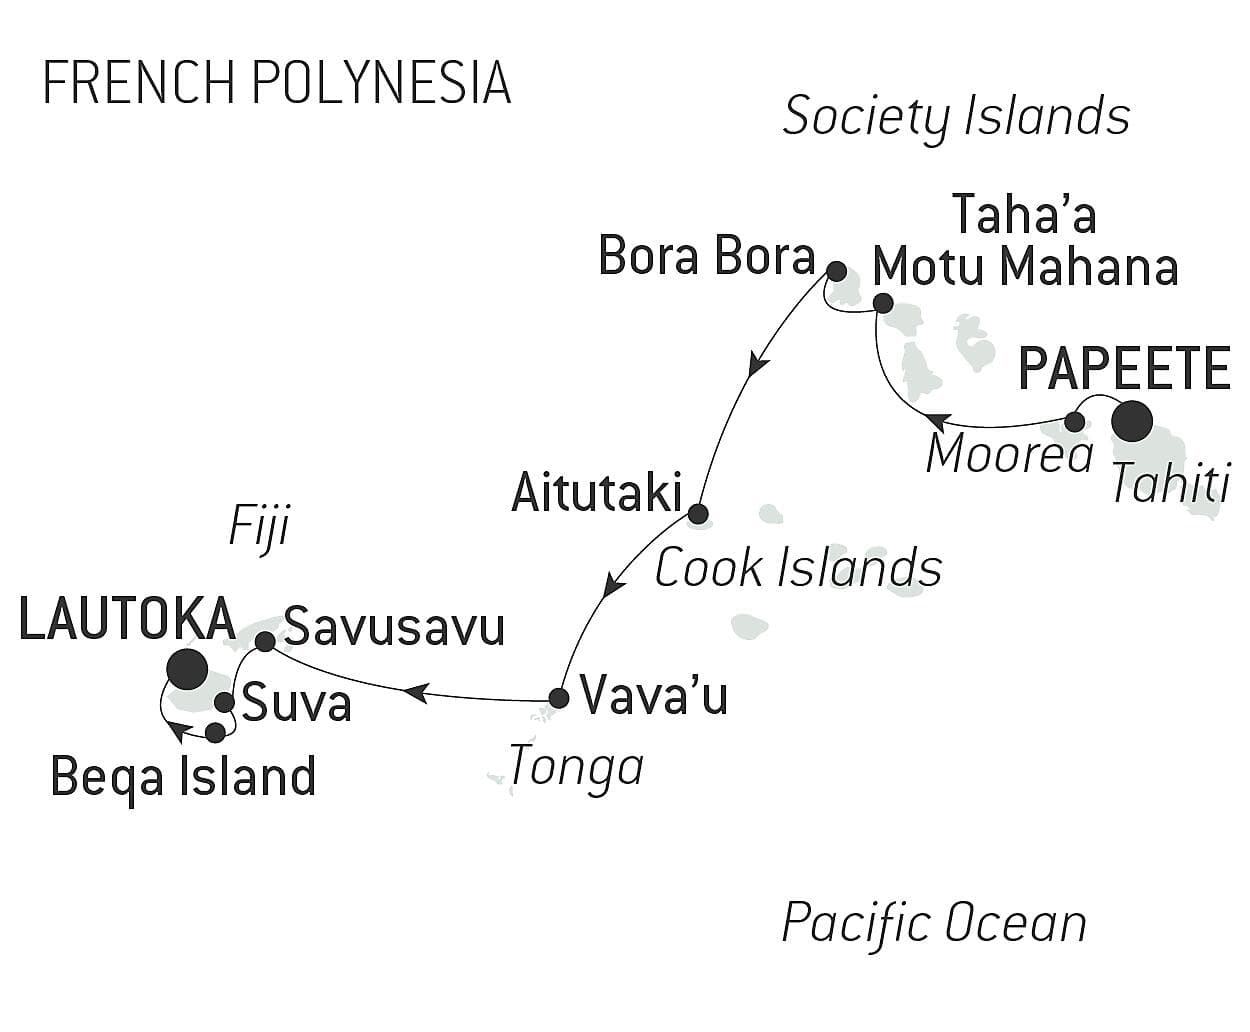 Fiji, Tonga, Cook Islands and Society Islands